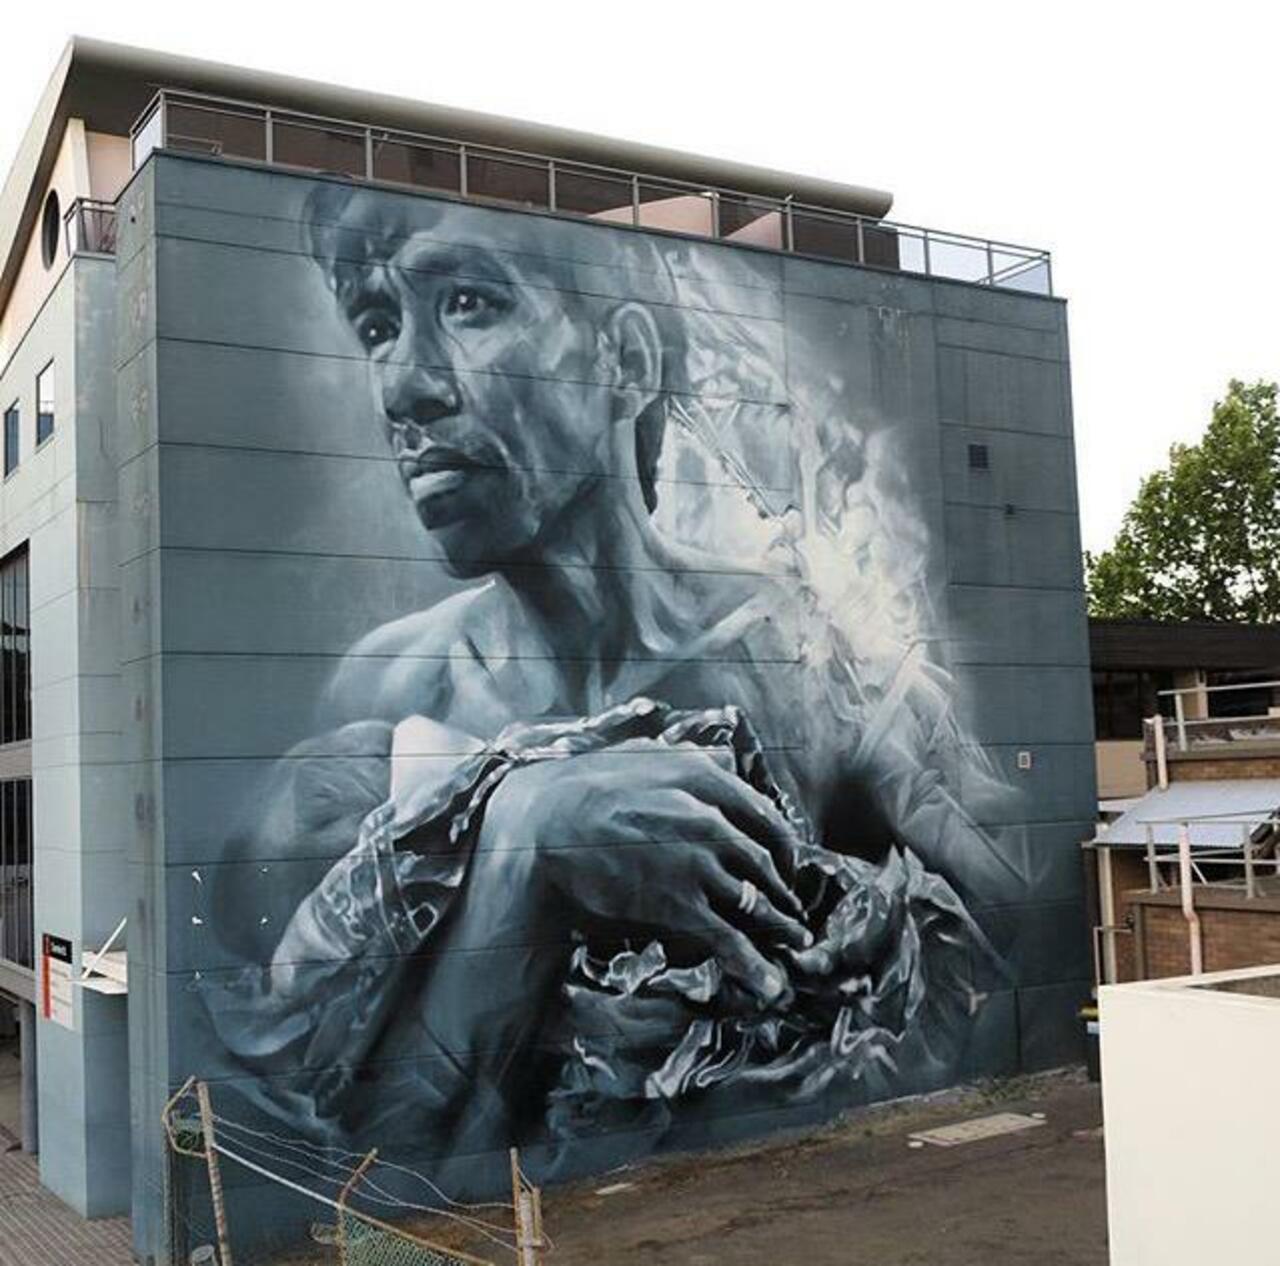 RT @GoogleStreetArt: New Street Art by Guido Van Helten in Wollongong Australia 

#art #graffiti #mural #streetart http://t.co/rZ90YzDb7t